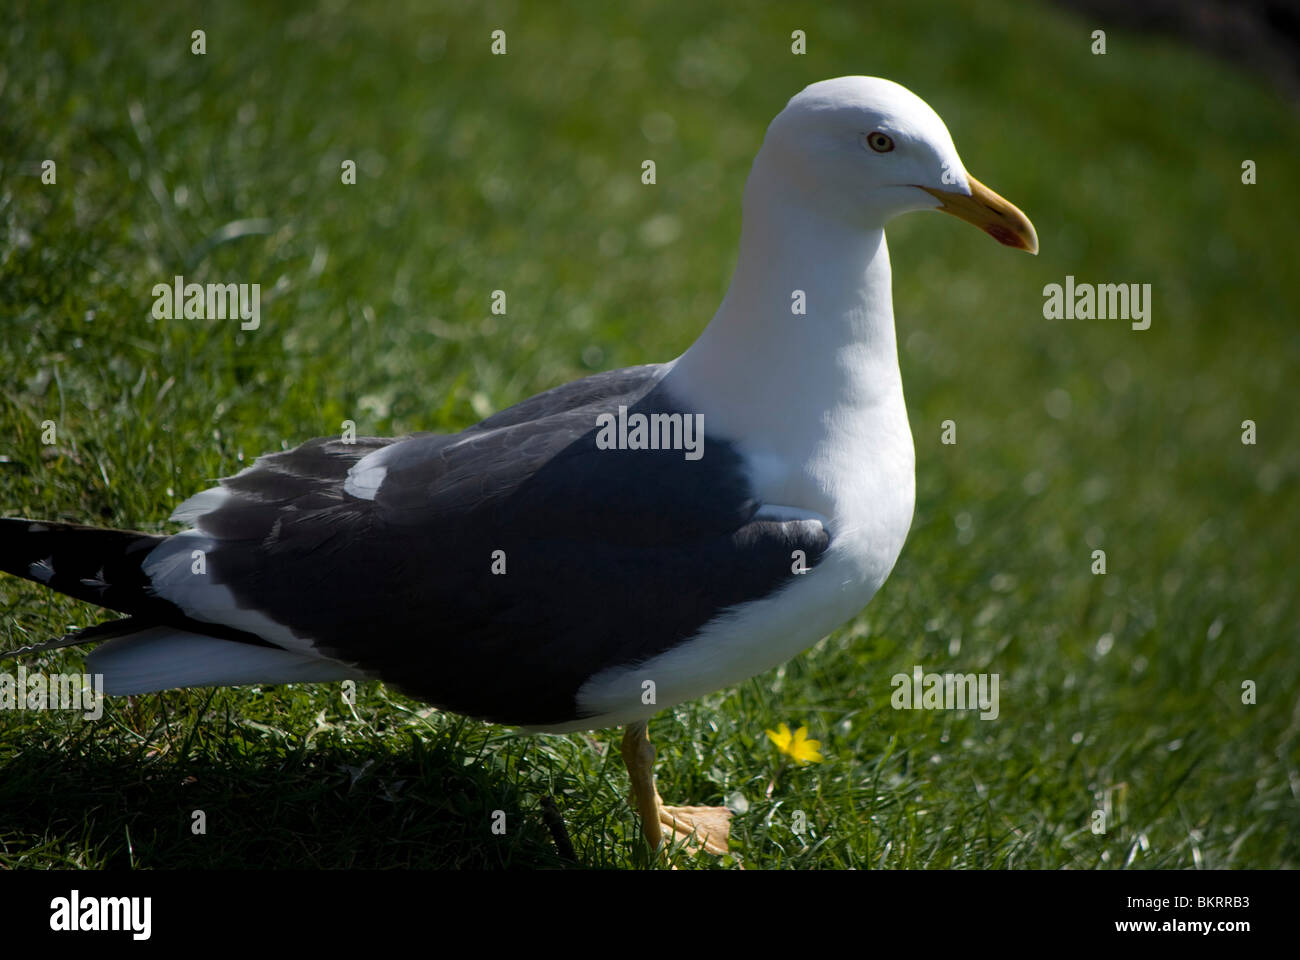 Great black-backed gull on the grass in Edinburgh, Scotland. Stock Photo